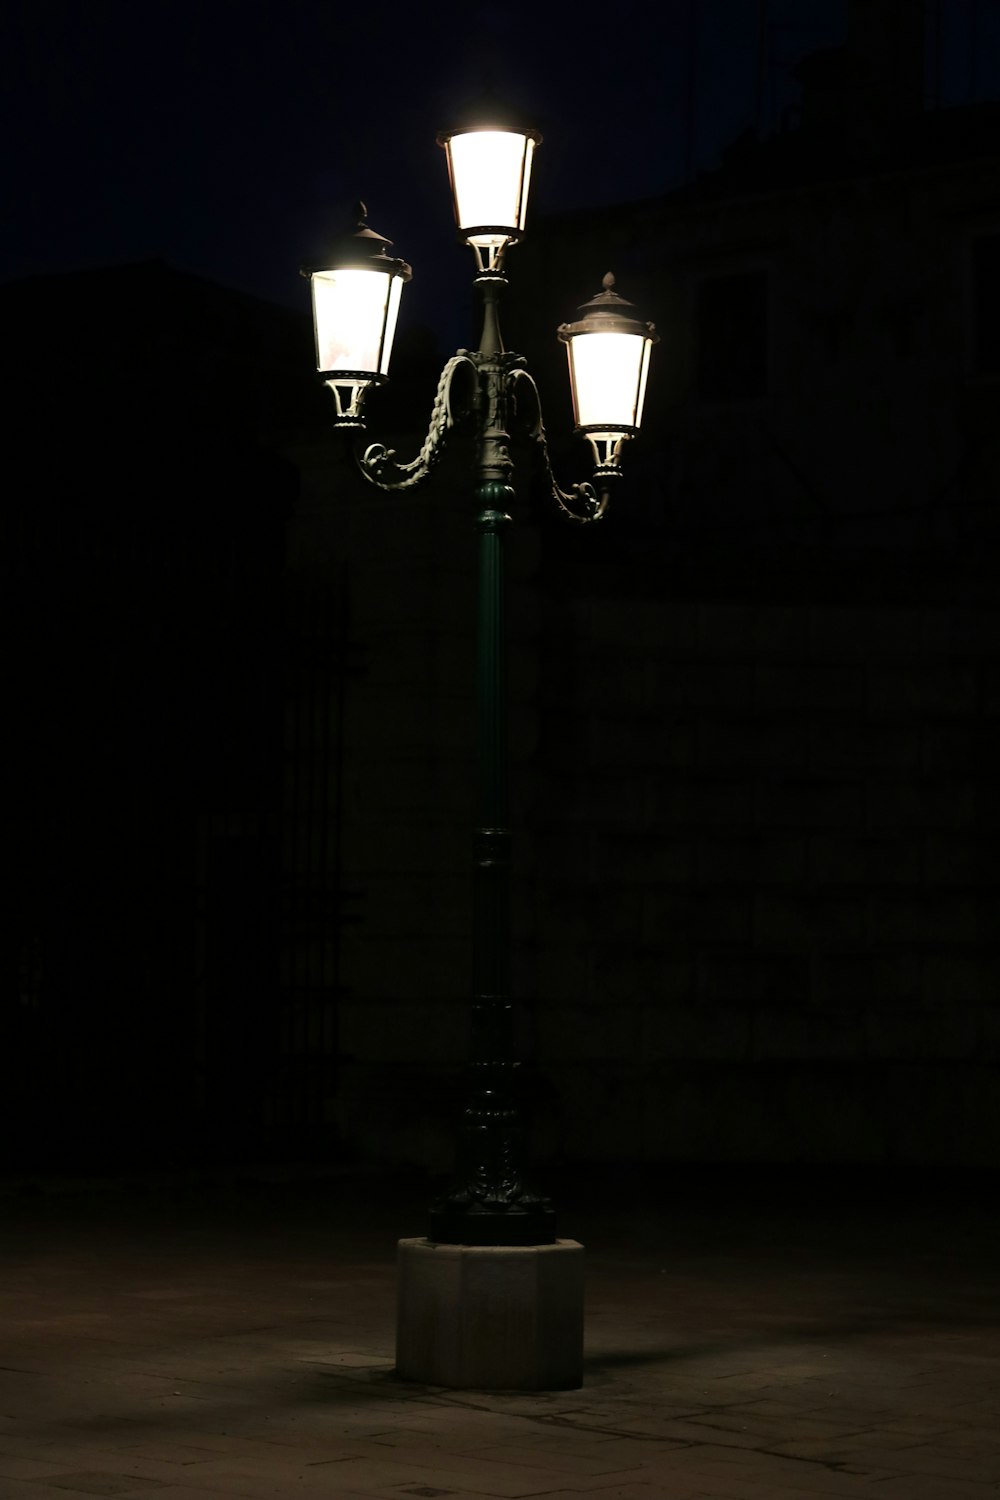 black 3-upright street lamp